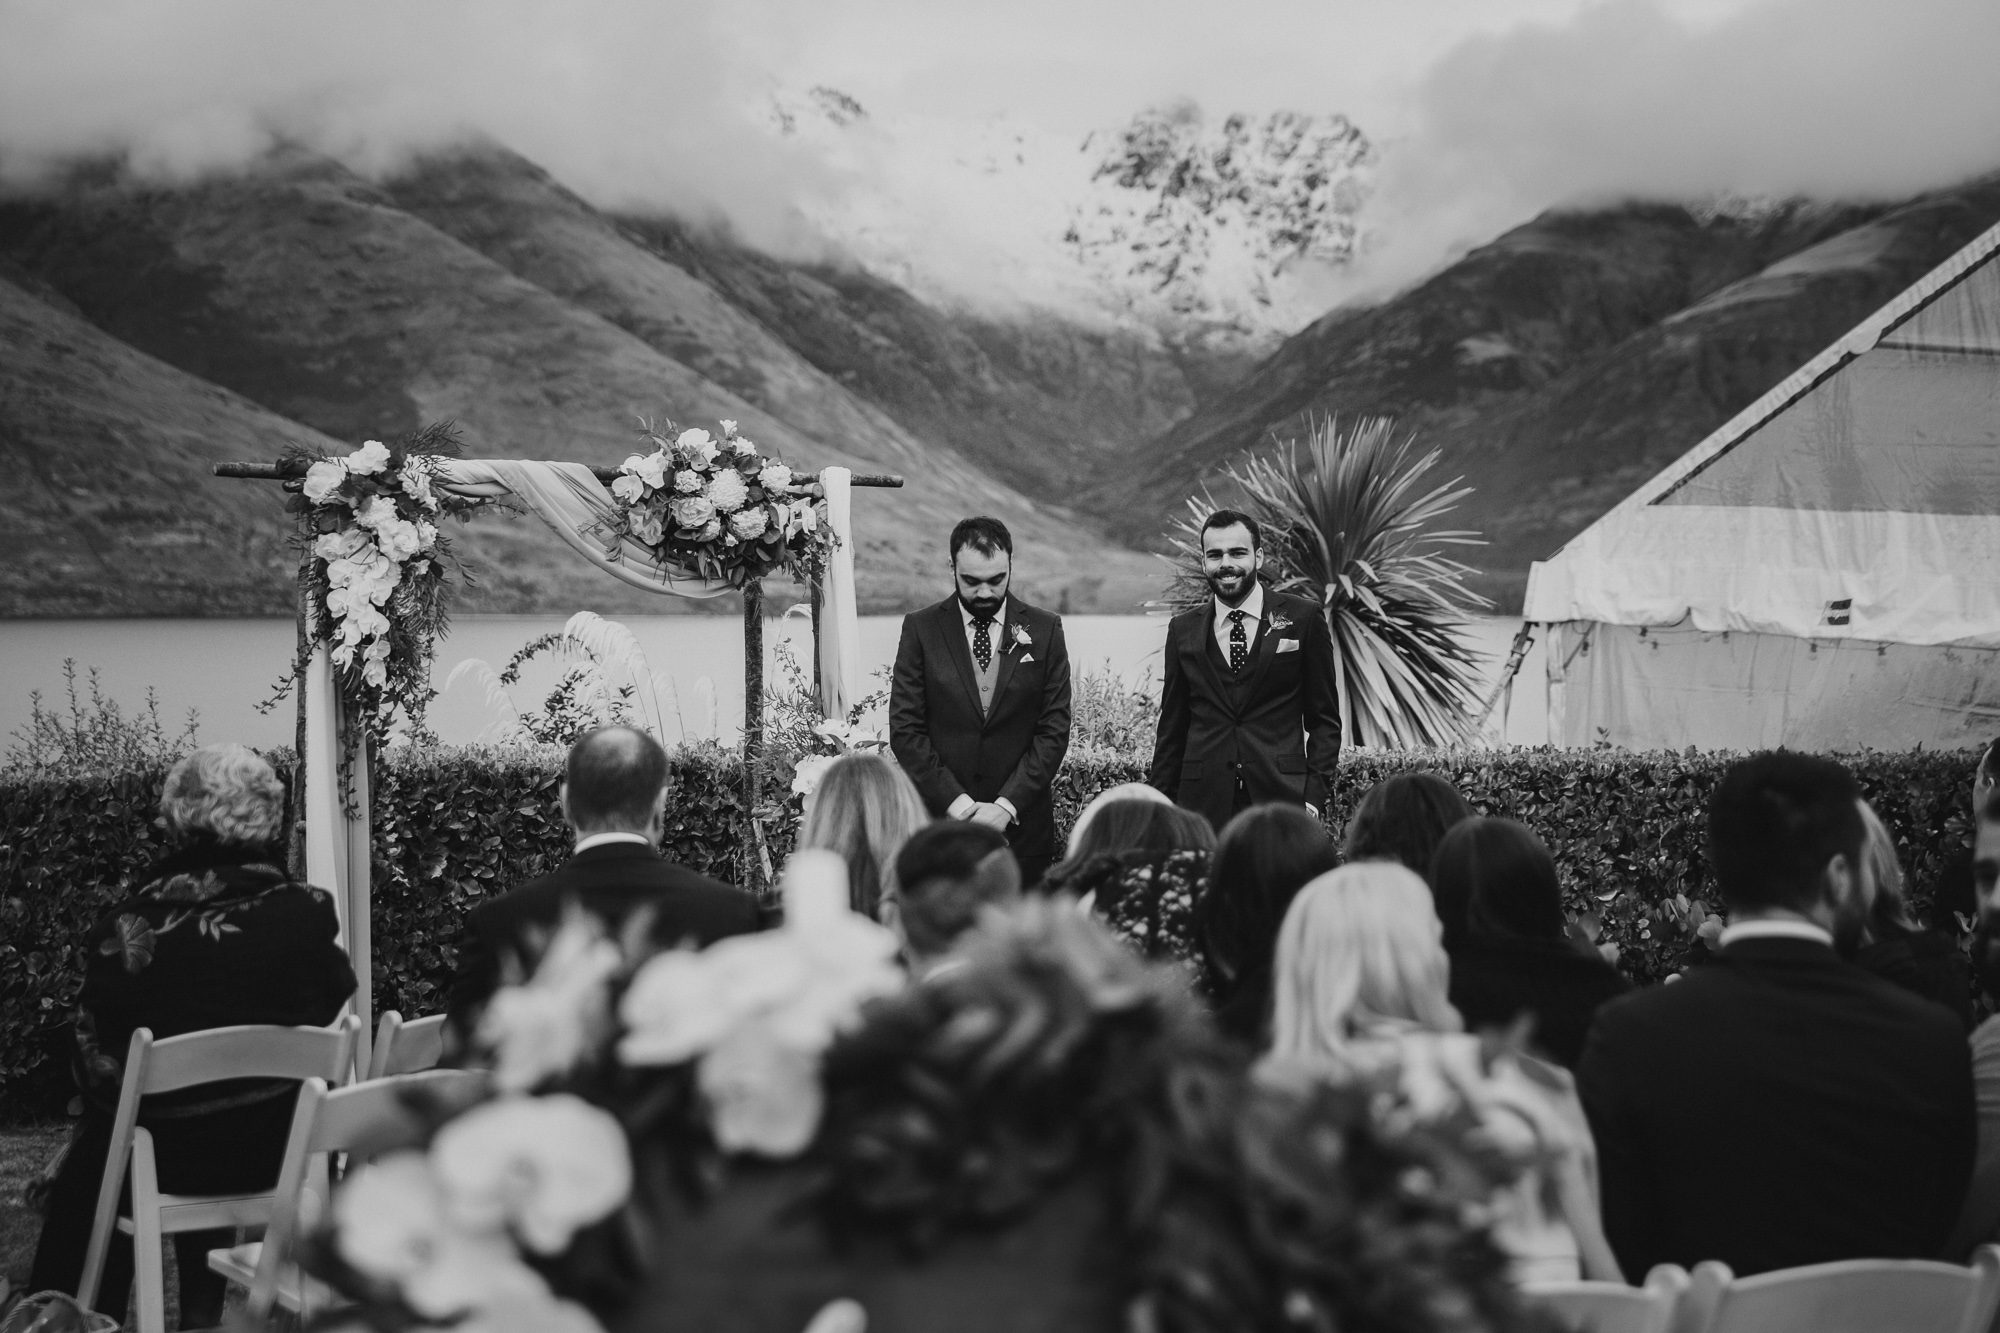 Matakauri Lodge winter wedding in Queenstown NZ